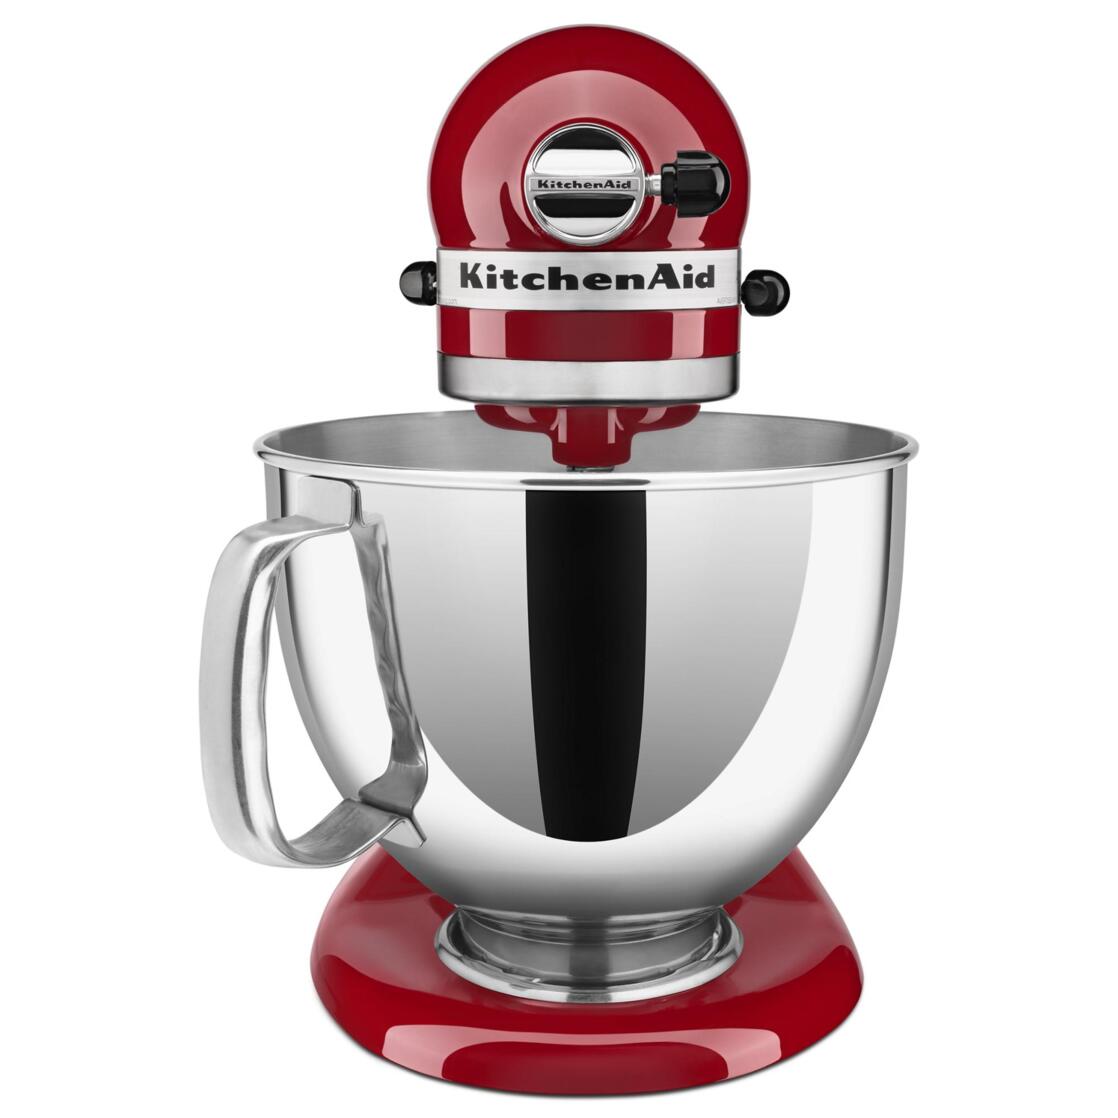 KitchenAid® Artisan® Series 5 Quart Tilt-Head Stand Mixer, Empire Red, KSM150PS - image 3 of 9